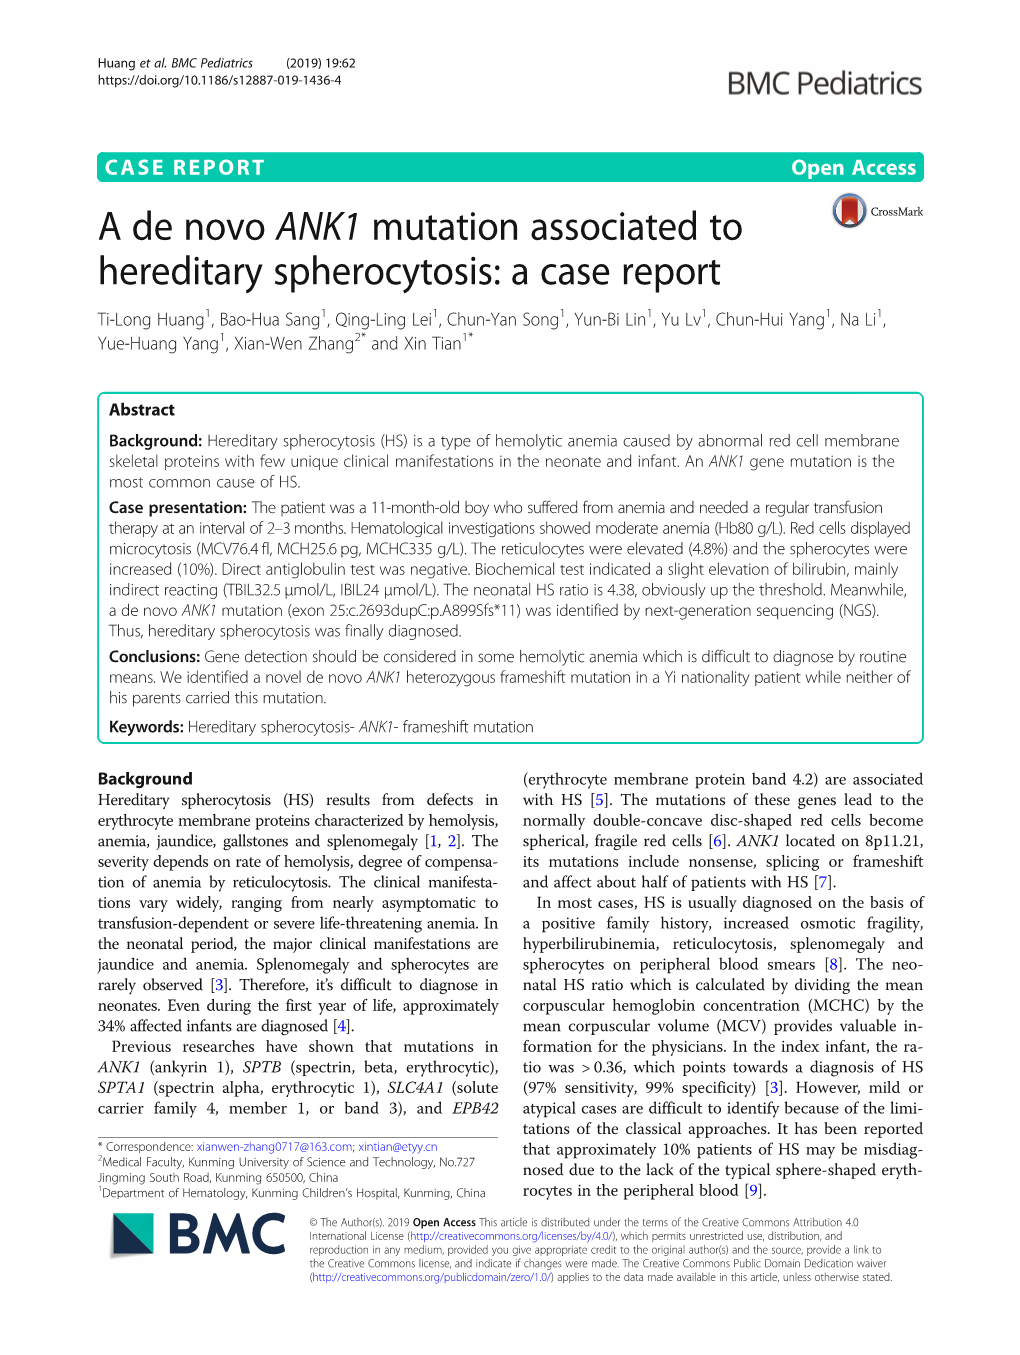 A De Novo ANK1 Mutation Associated to Hereditary Spherocytosis: a Case Report